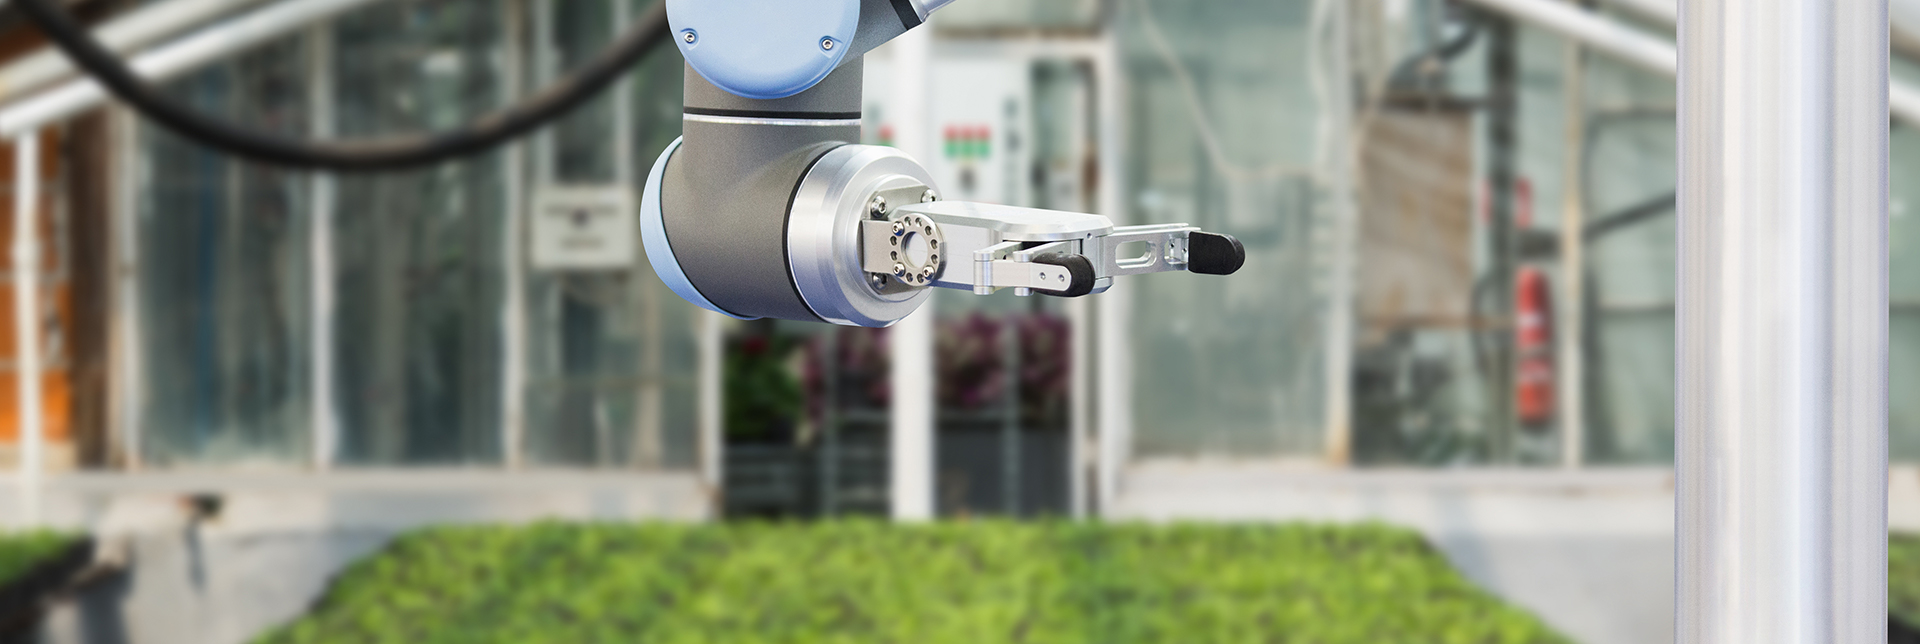 robots-on-farms-header.jpg